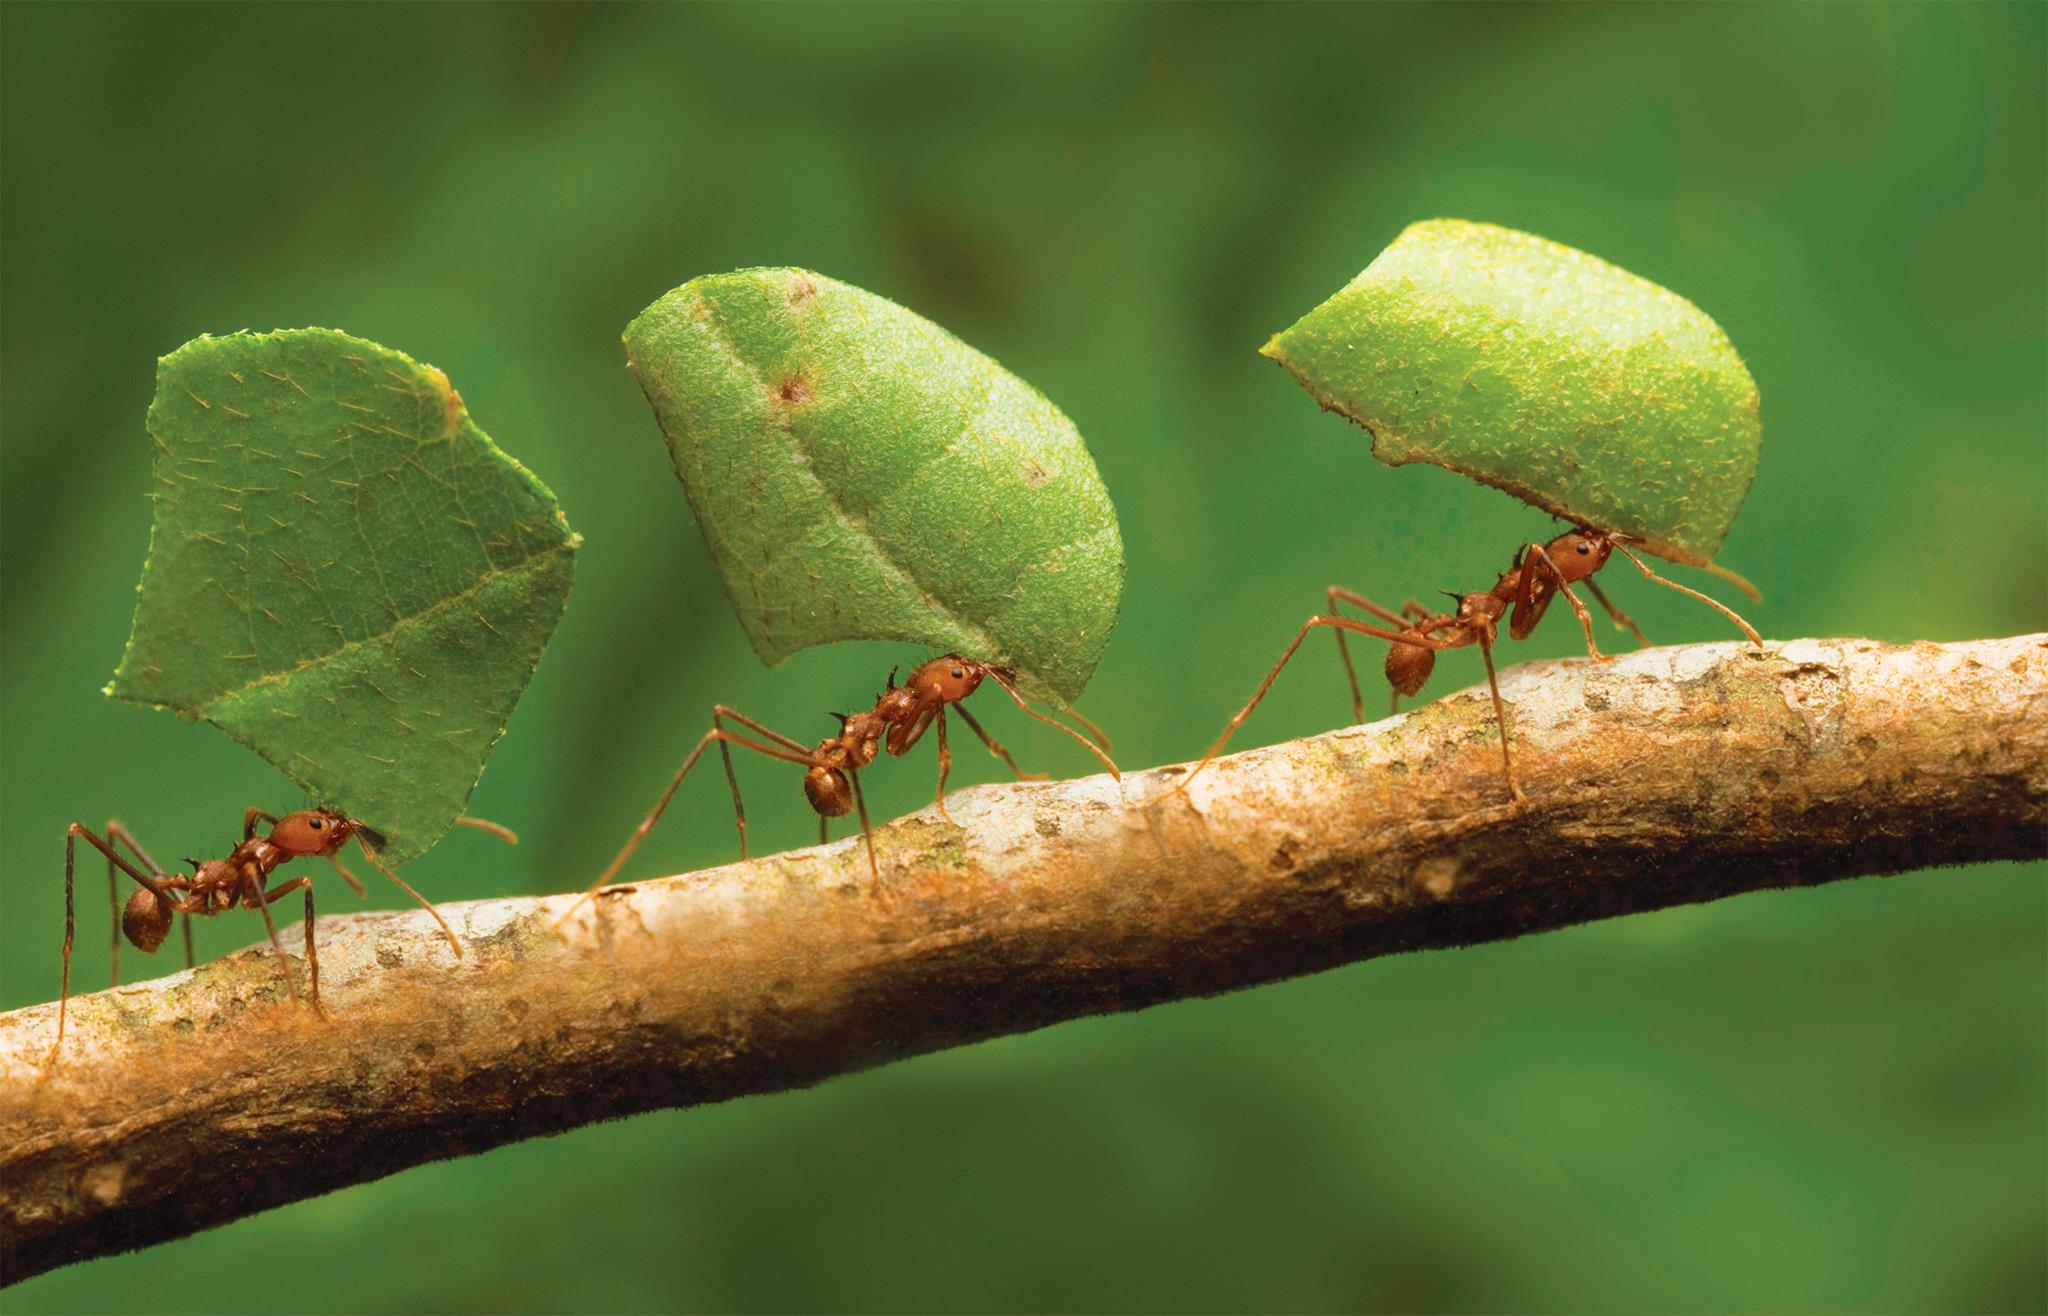 Como controlar Formigas cortadeiras de forma biológica/natural.